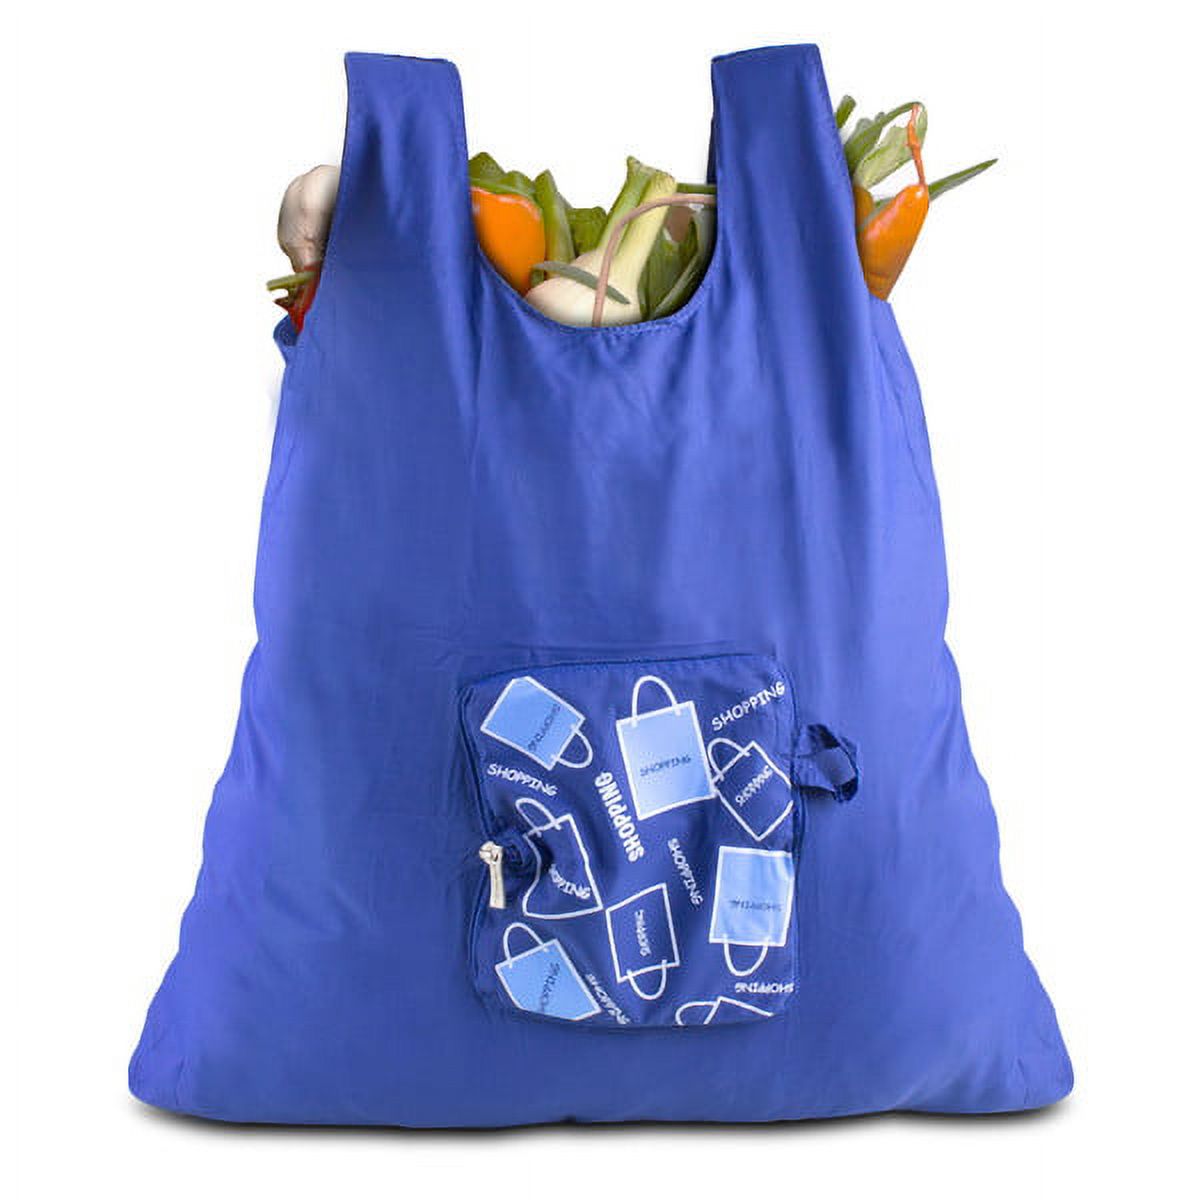 Travelon Pocket Packs Shopping Bag, Blue - image 1 of 1